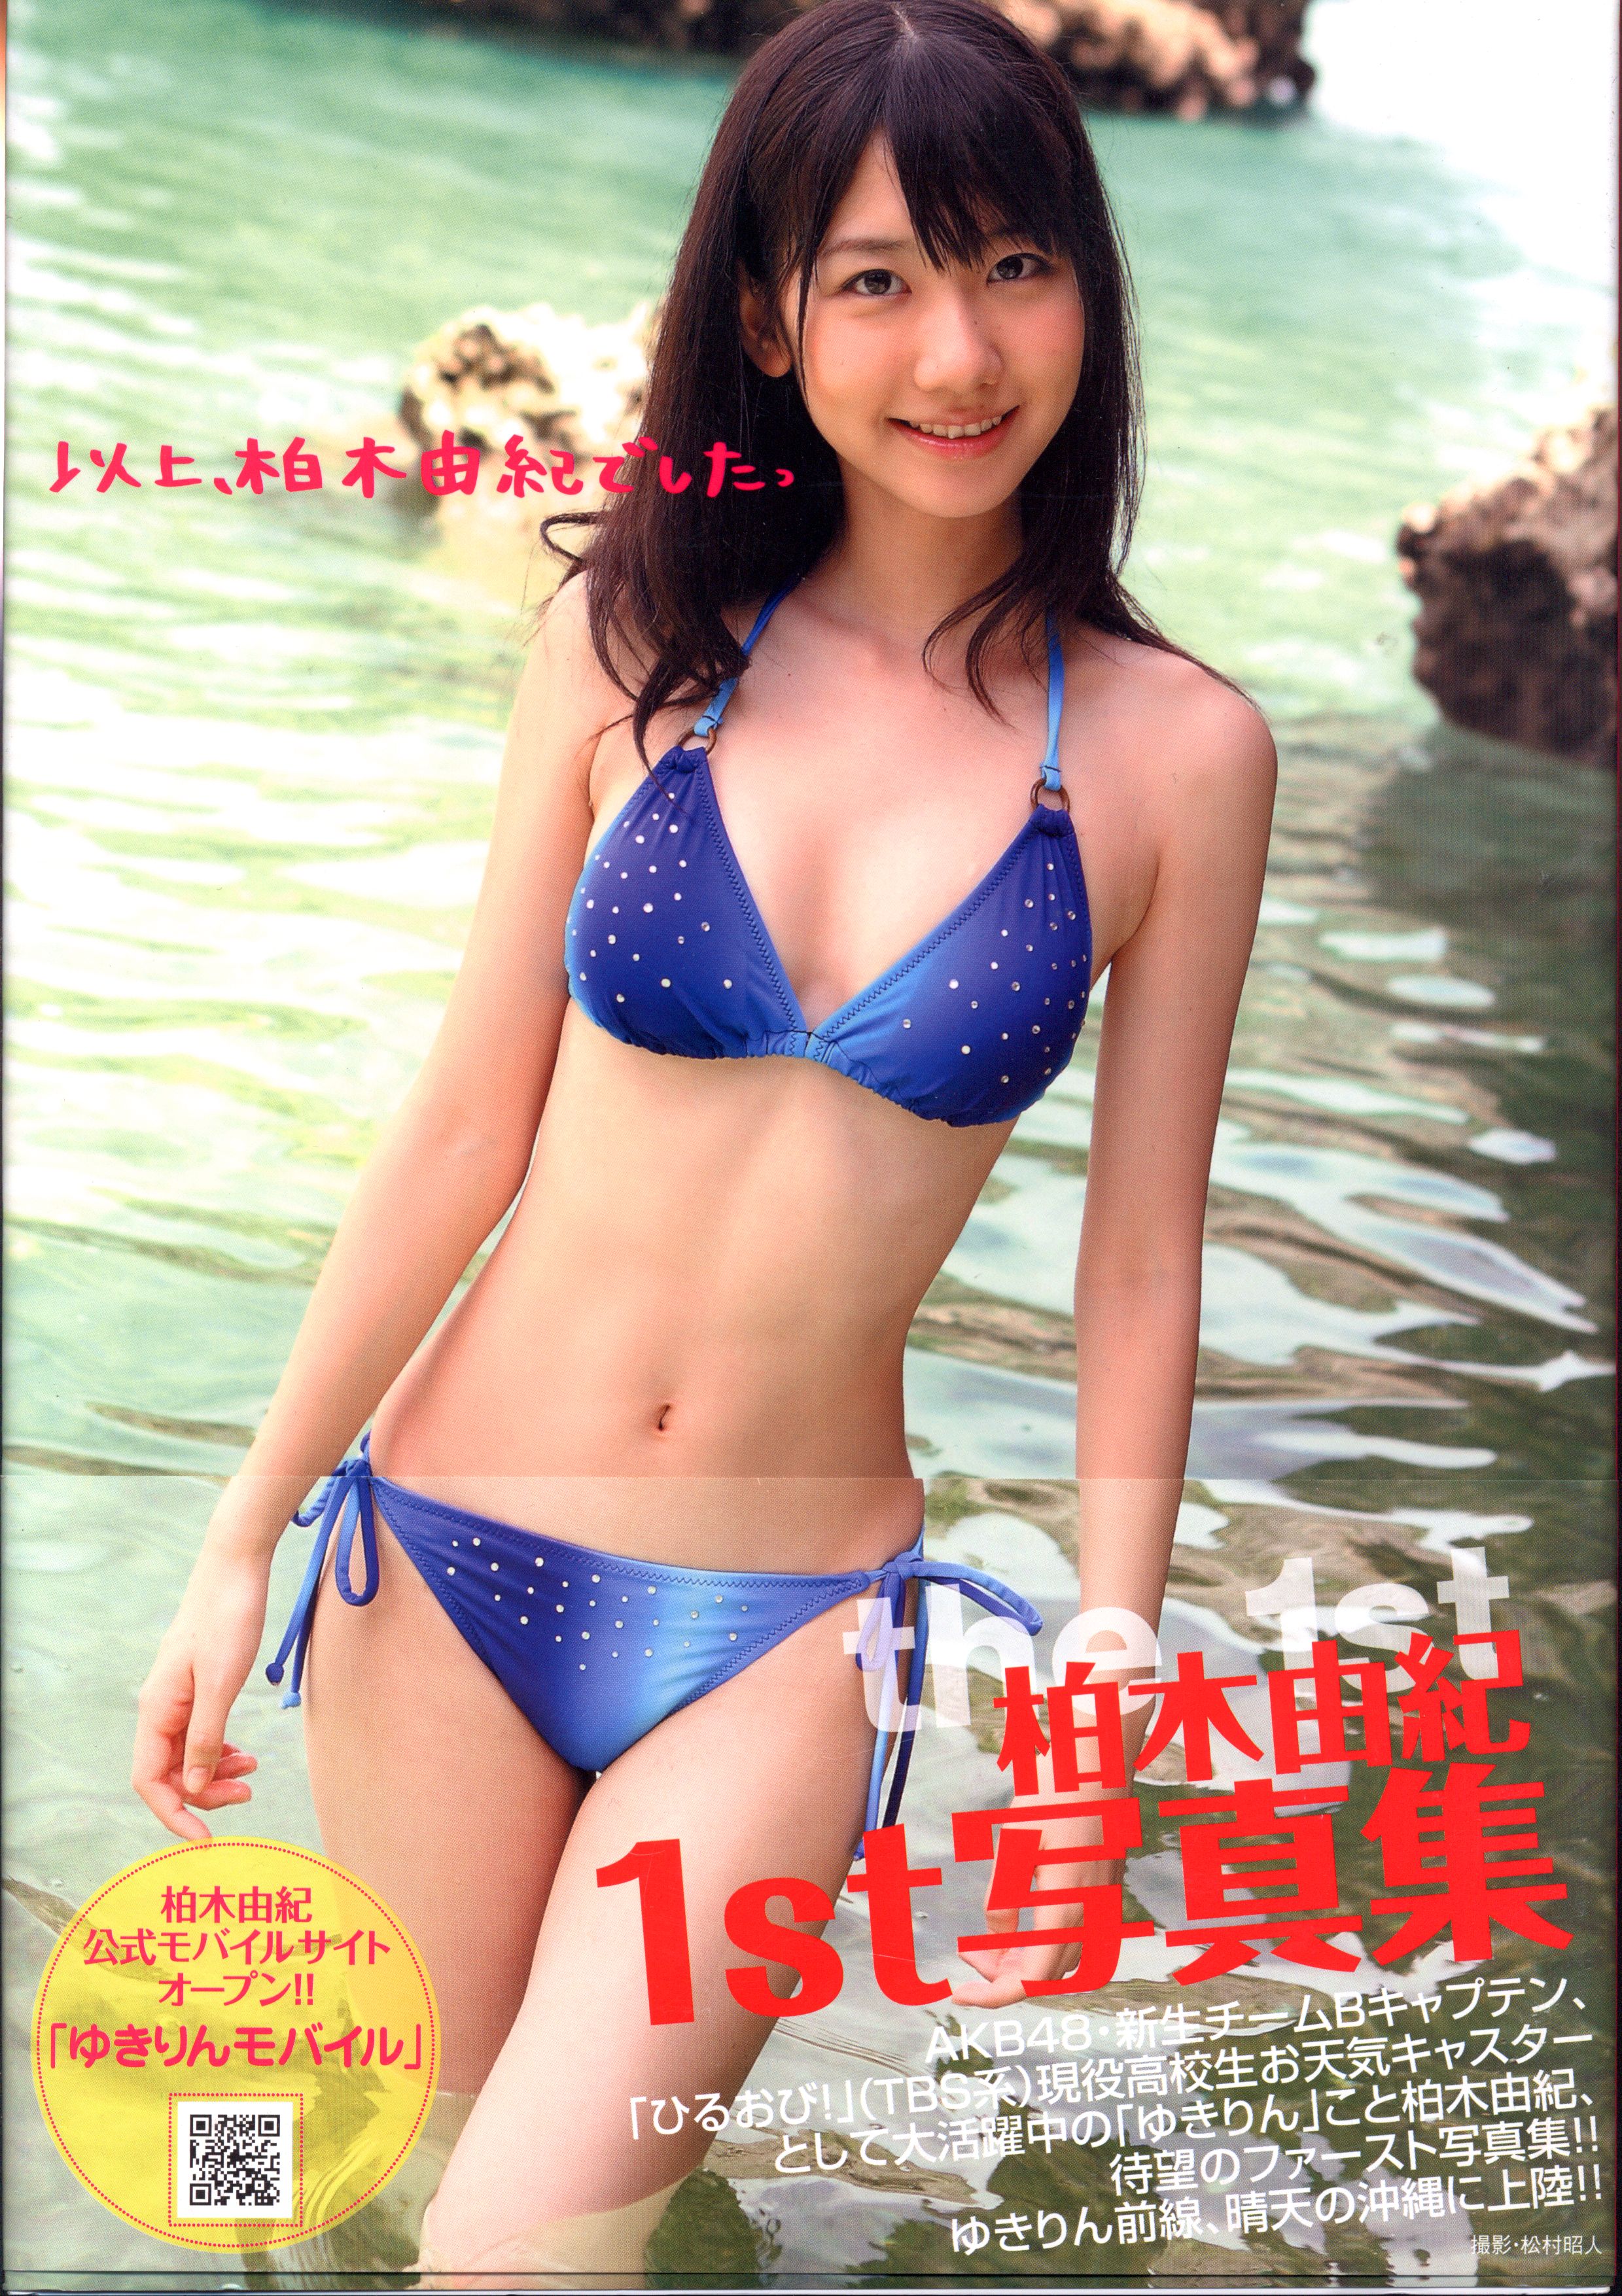 2479px x 3510px - Tokyo News Service AKB48 Yuki Kashiwagi more, Tsu was Yuki Kashiwagi |  Mandarake Online Shop